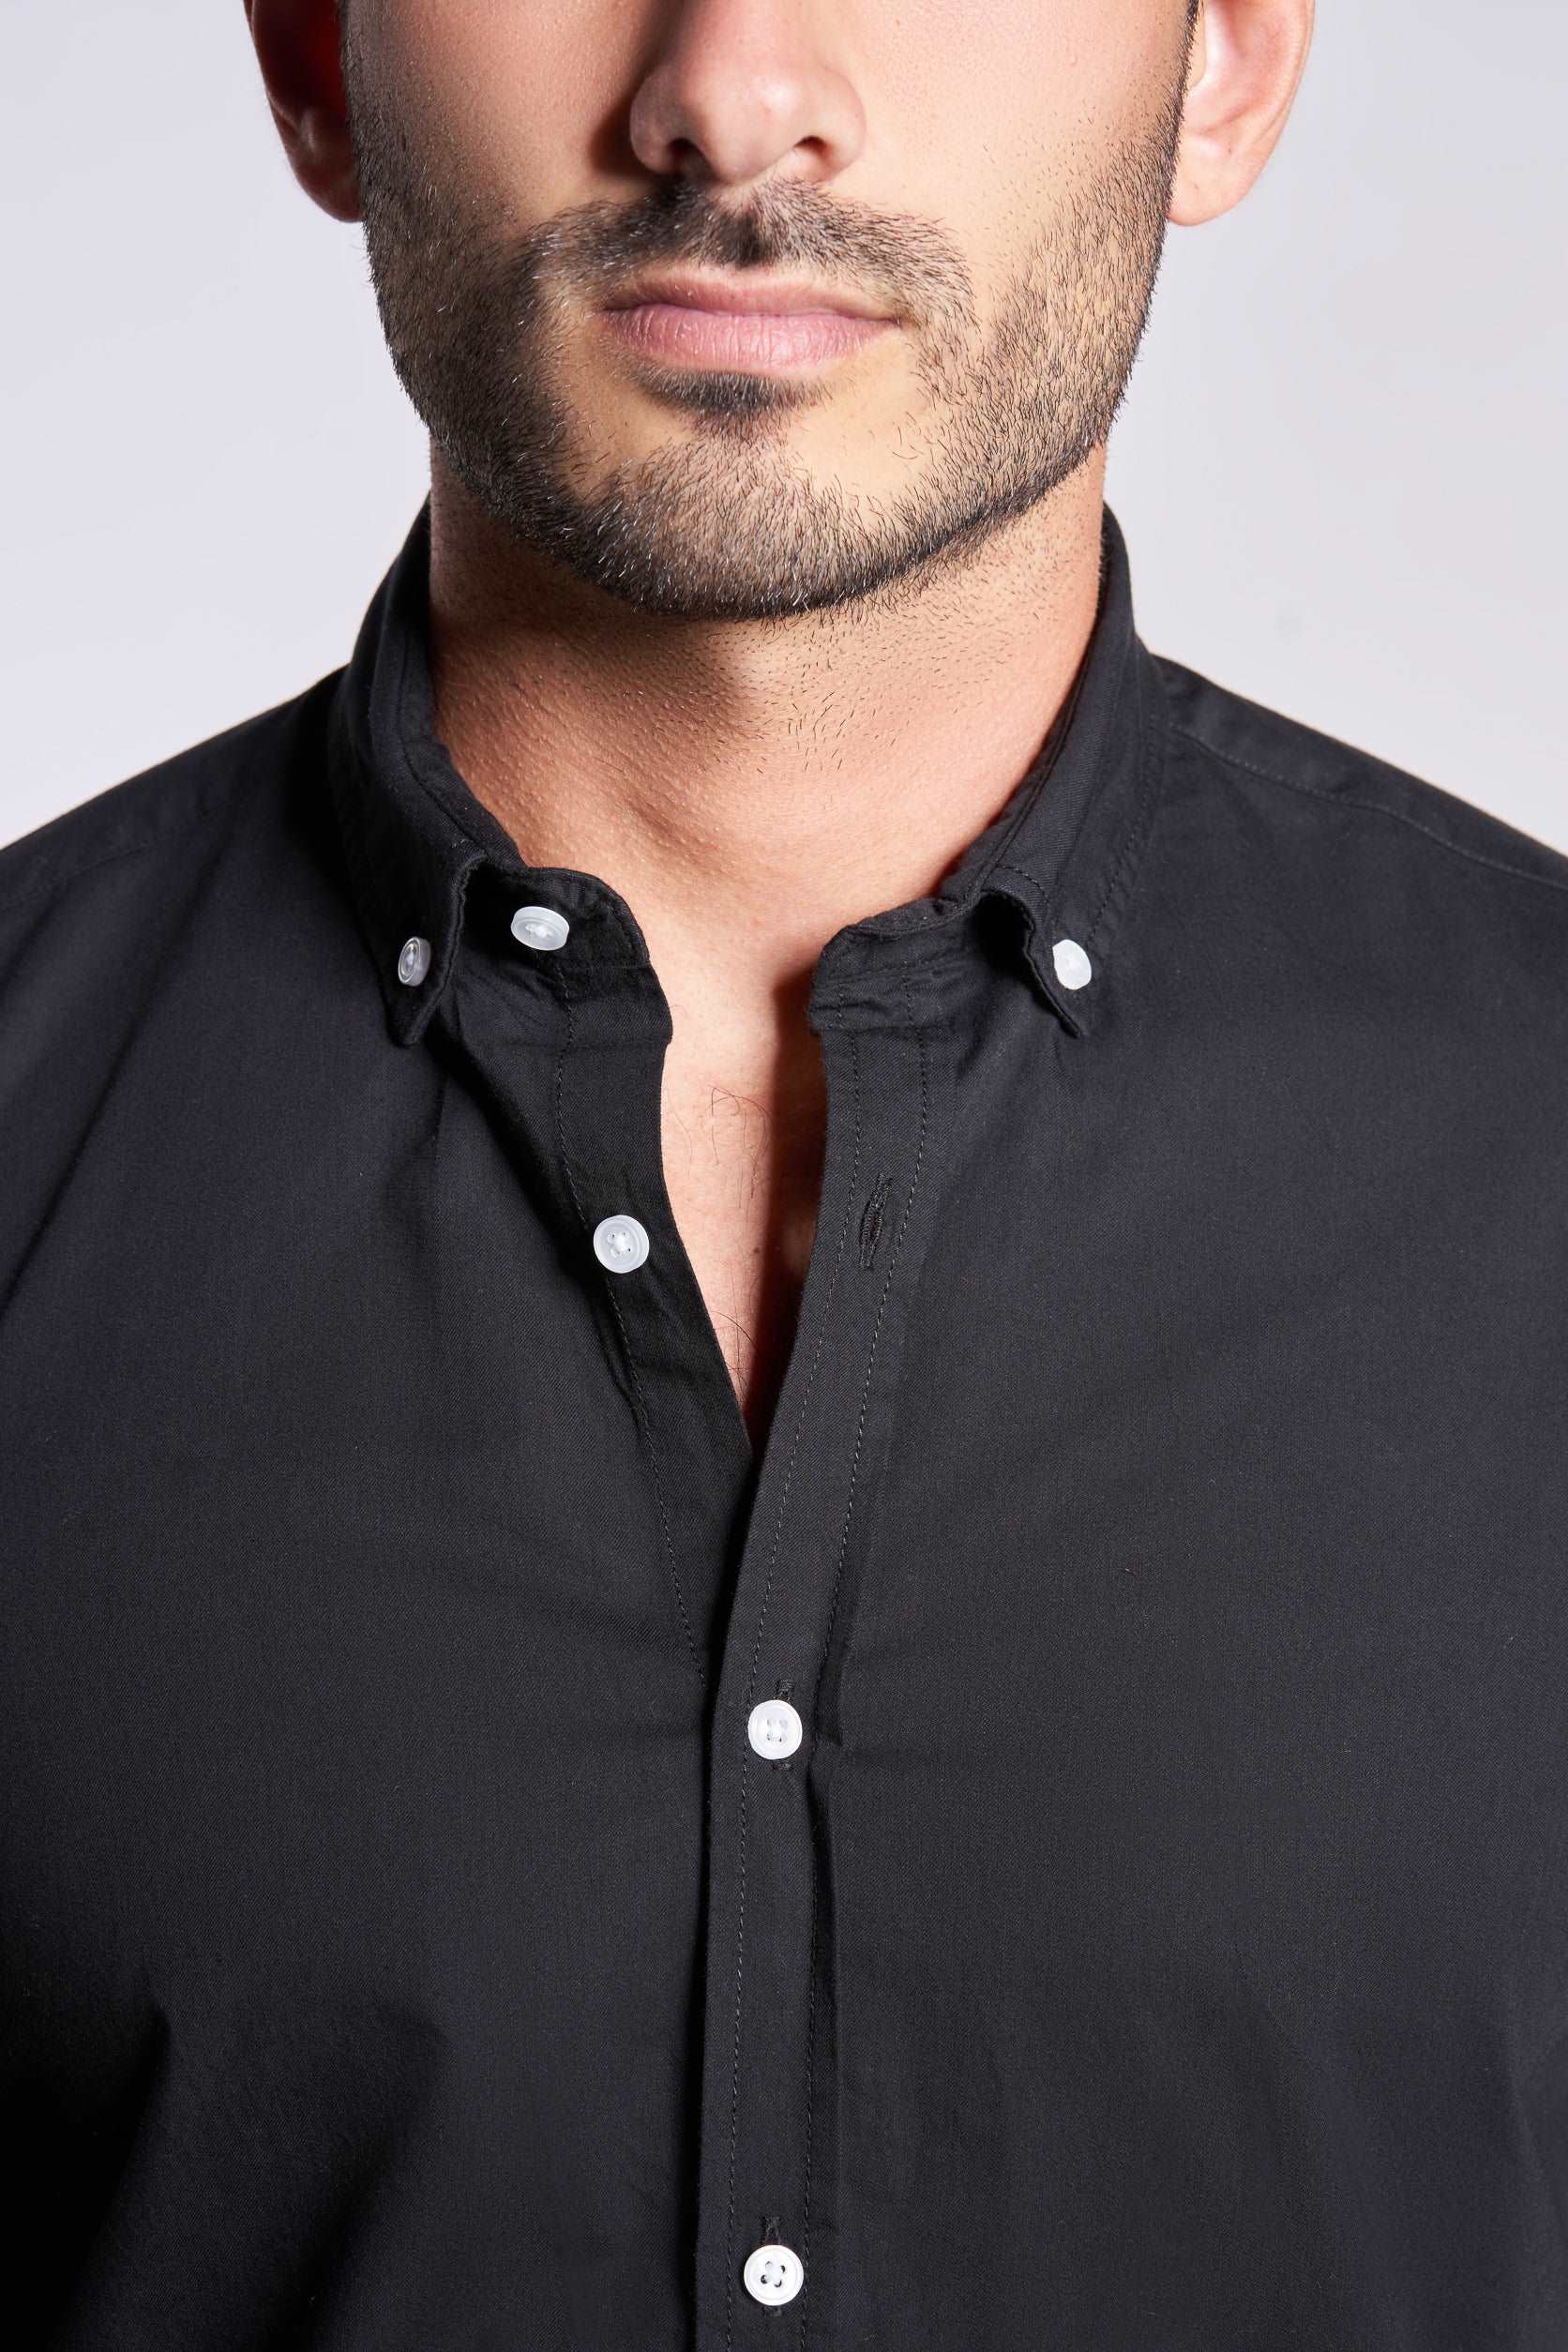 Black long sleeves men's shirts regular fit(728)